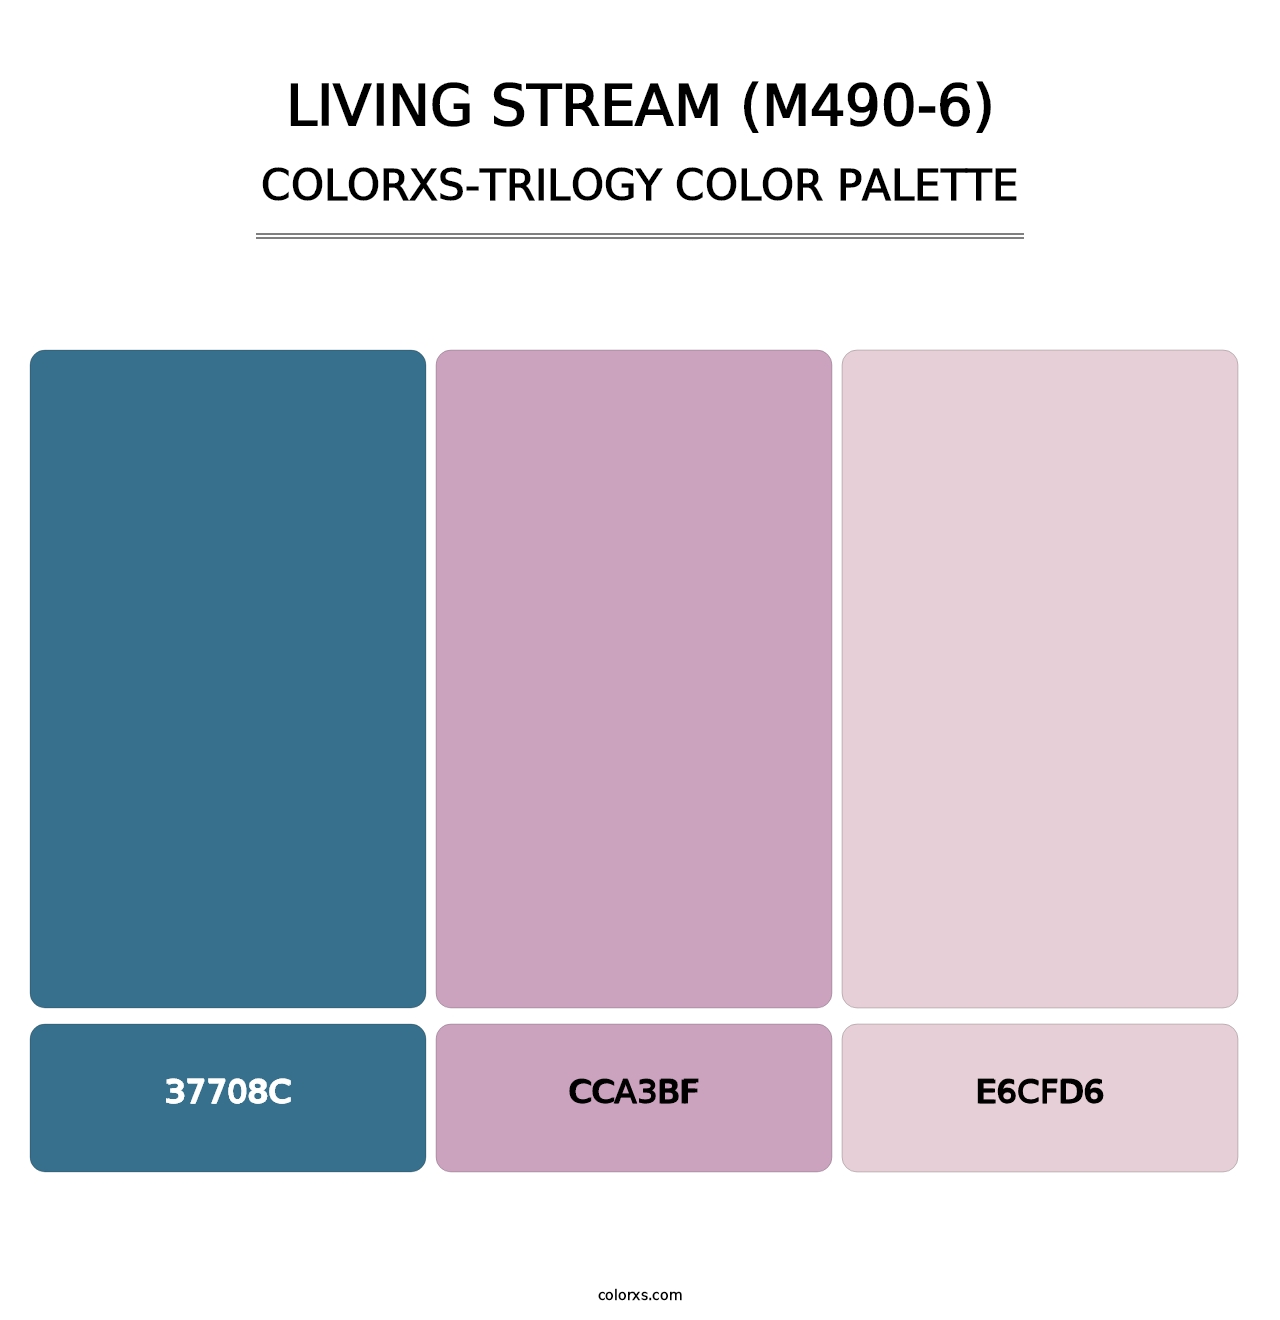 Living Stream (M490-6) - Colorxs Trilogy Palette